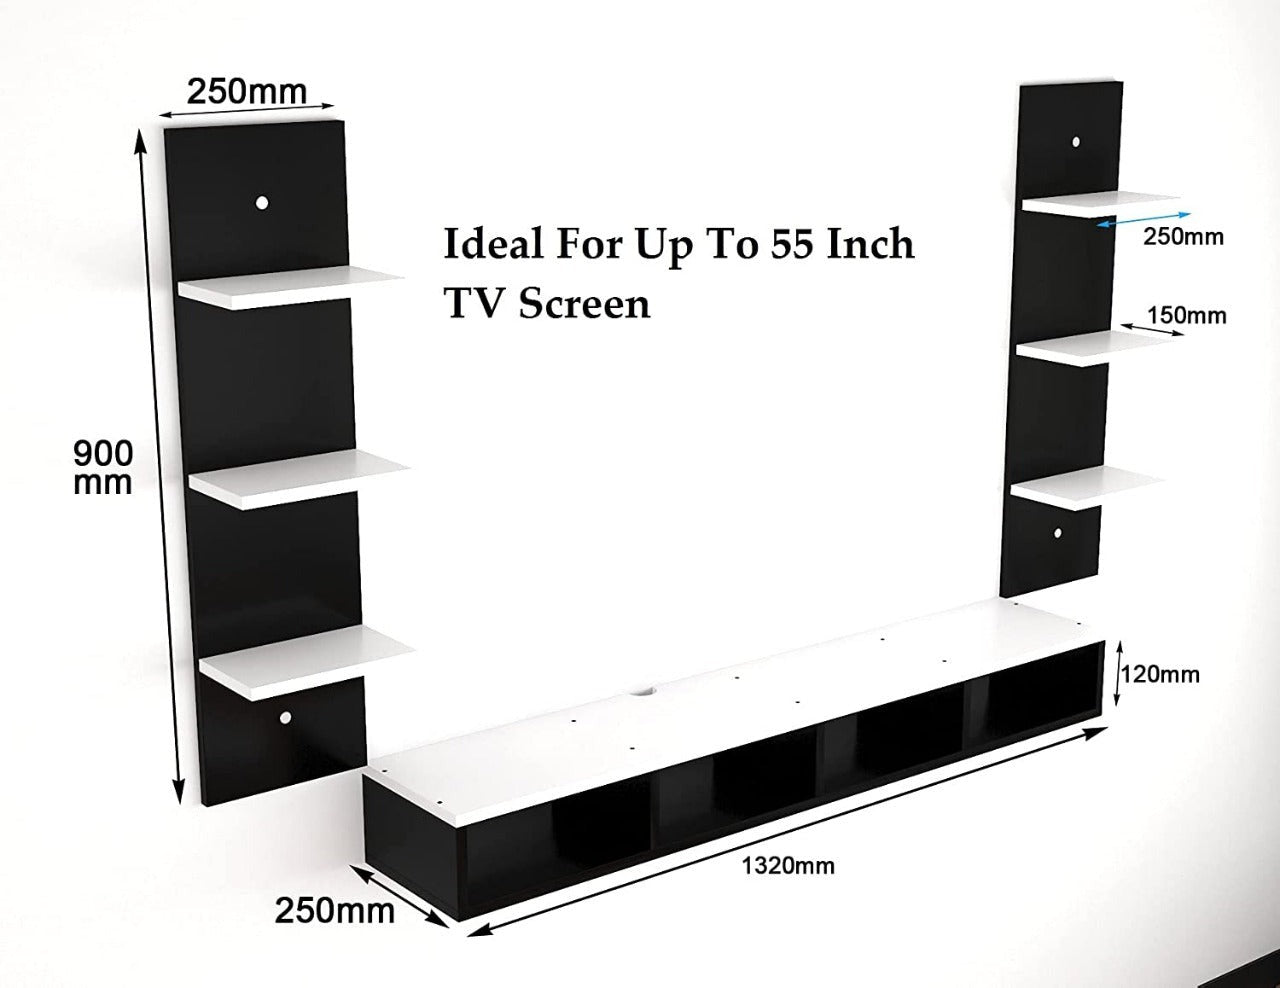 Wall Mount TV Unit: 6 Wall Shelf Display Rack for Living Room